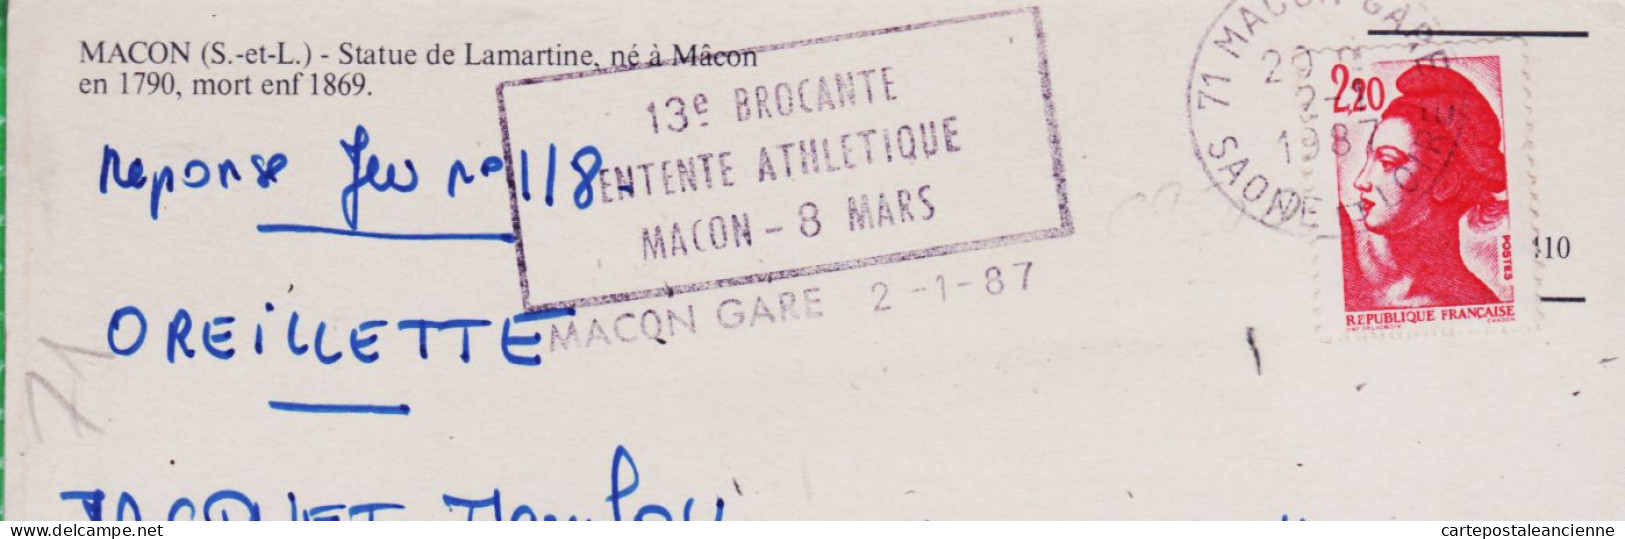 27009 / ⭐ 71-MACON  Statue LAMARTINE Flamme Postale 13em Brocante Entente Athlétique 08.03.1987 Editions COMBIER - Macon